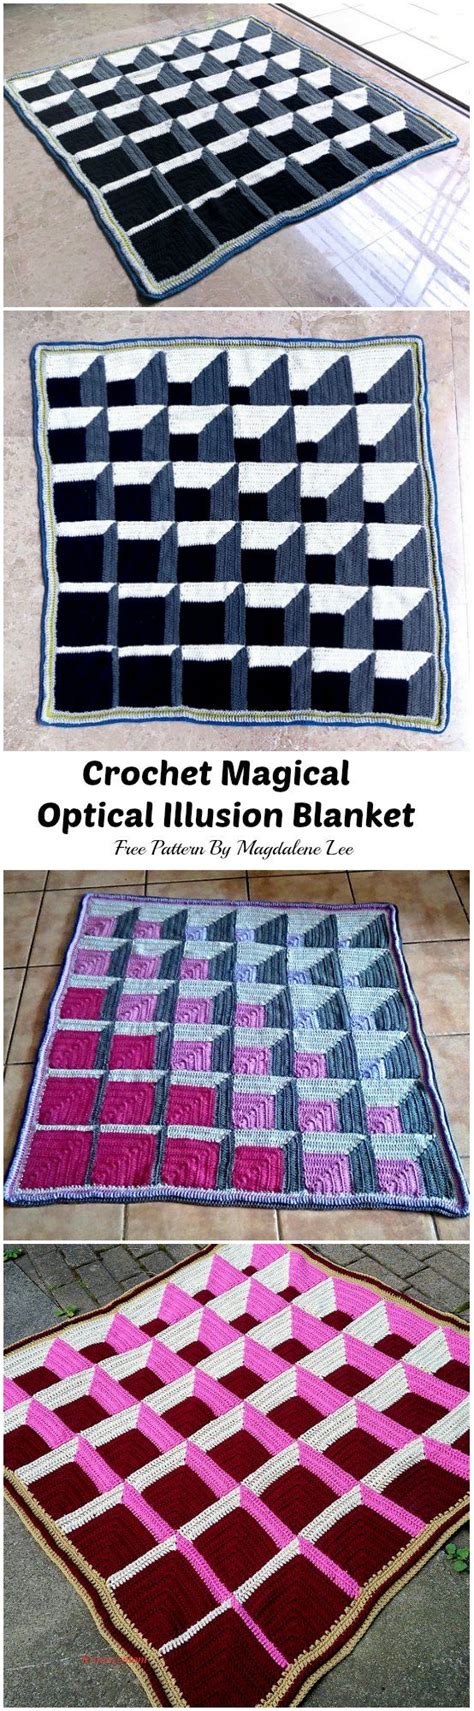 Crochet Magical Optical Illusion Blanket Crochet Blanket Patterns